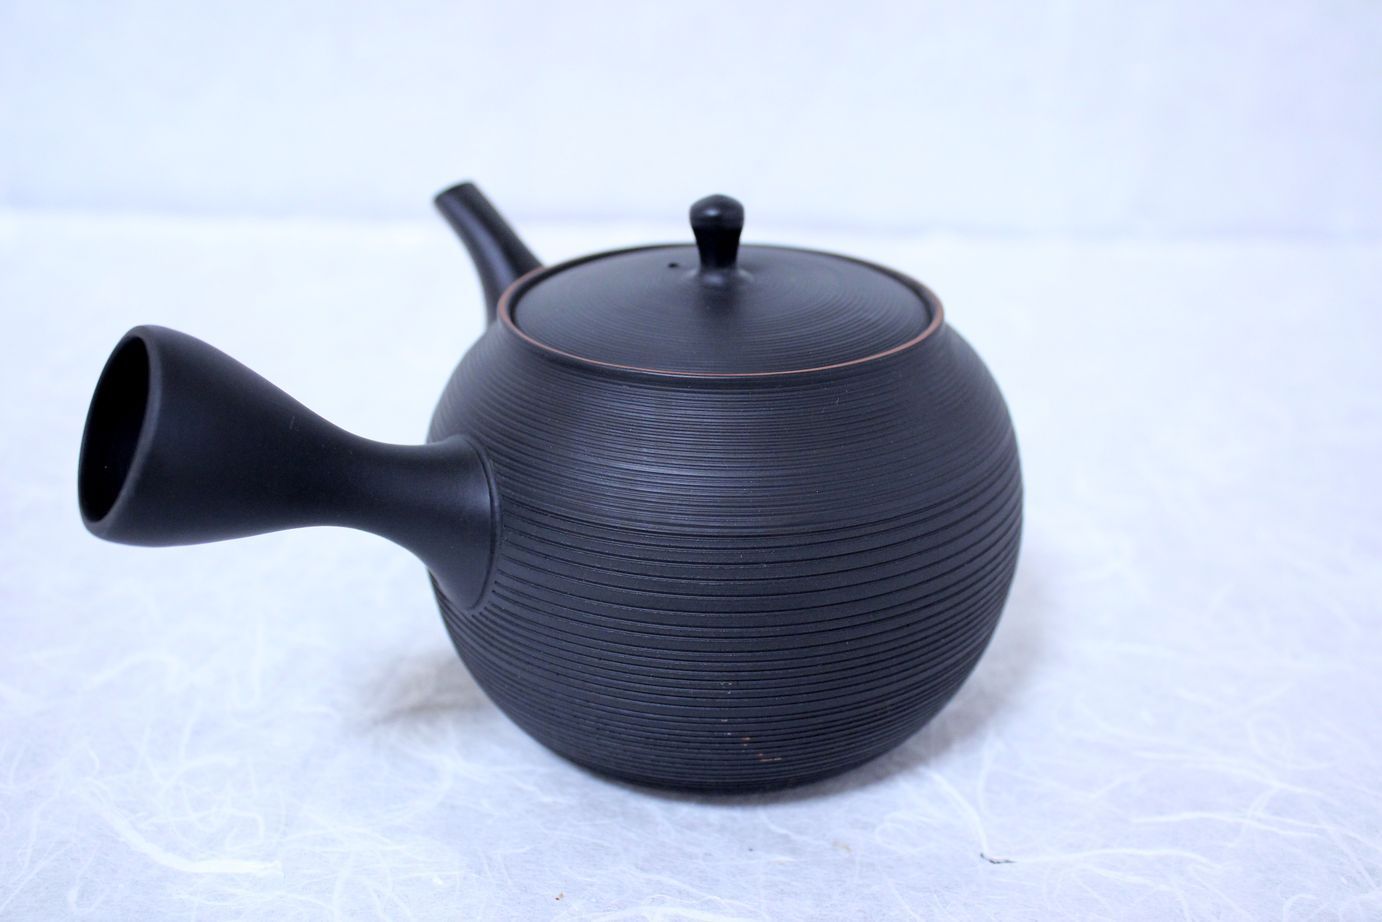 Japanese Small Tea Pot - Black